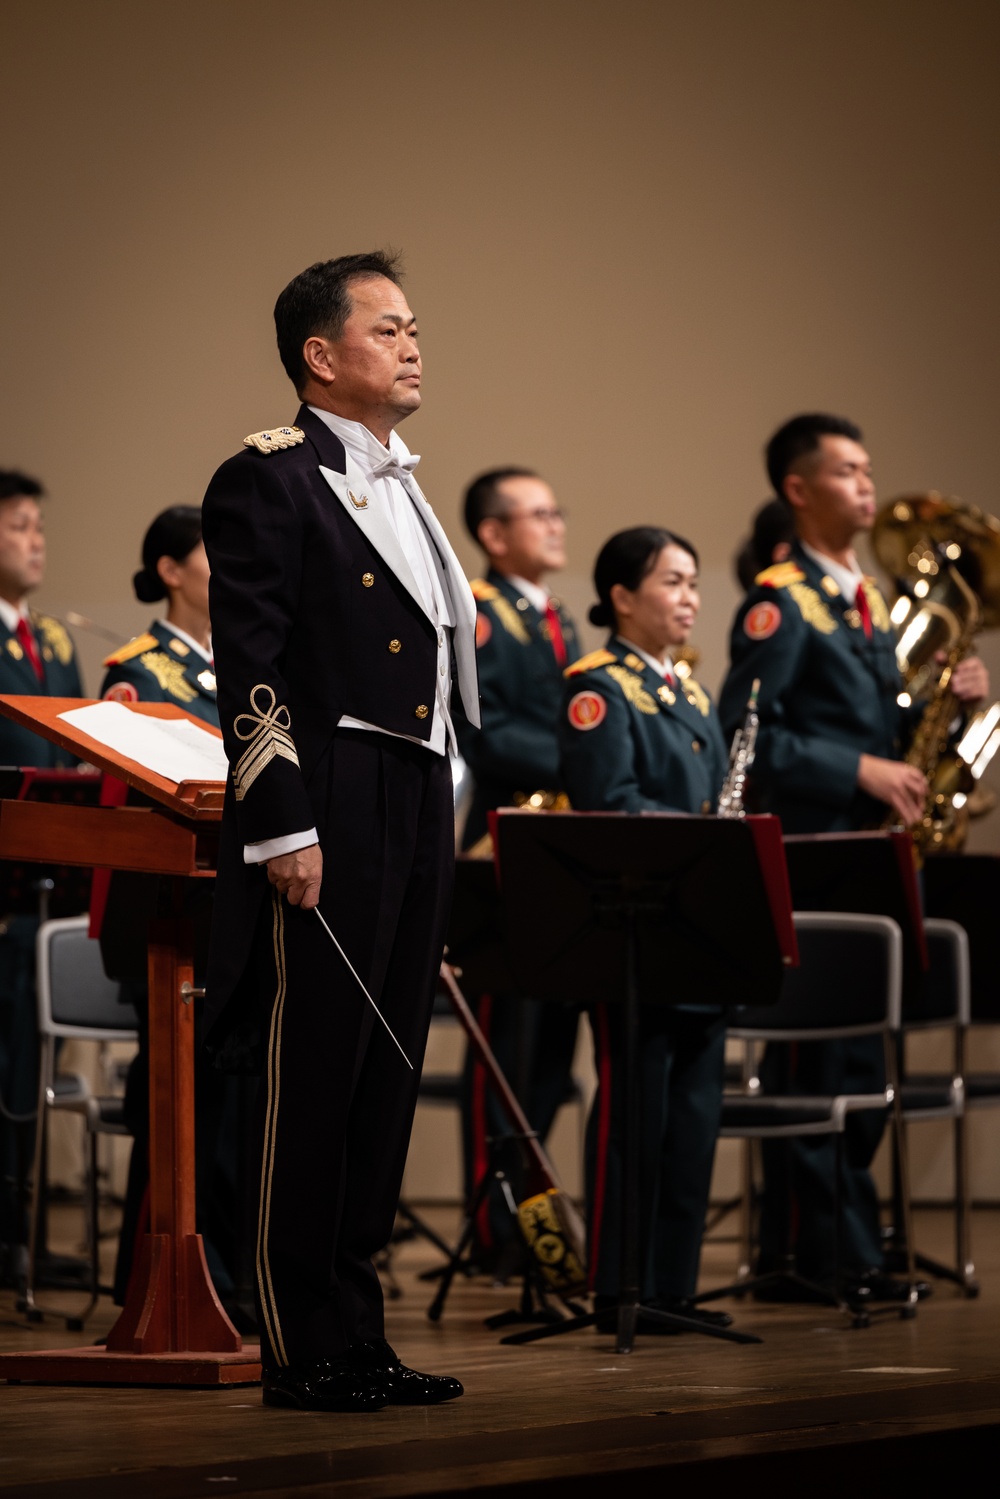 III MEF Band, JGSDF 15th Brigade Band perform 25th ‘Friendship Through Music’ Concert